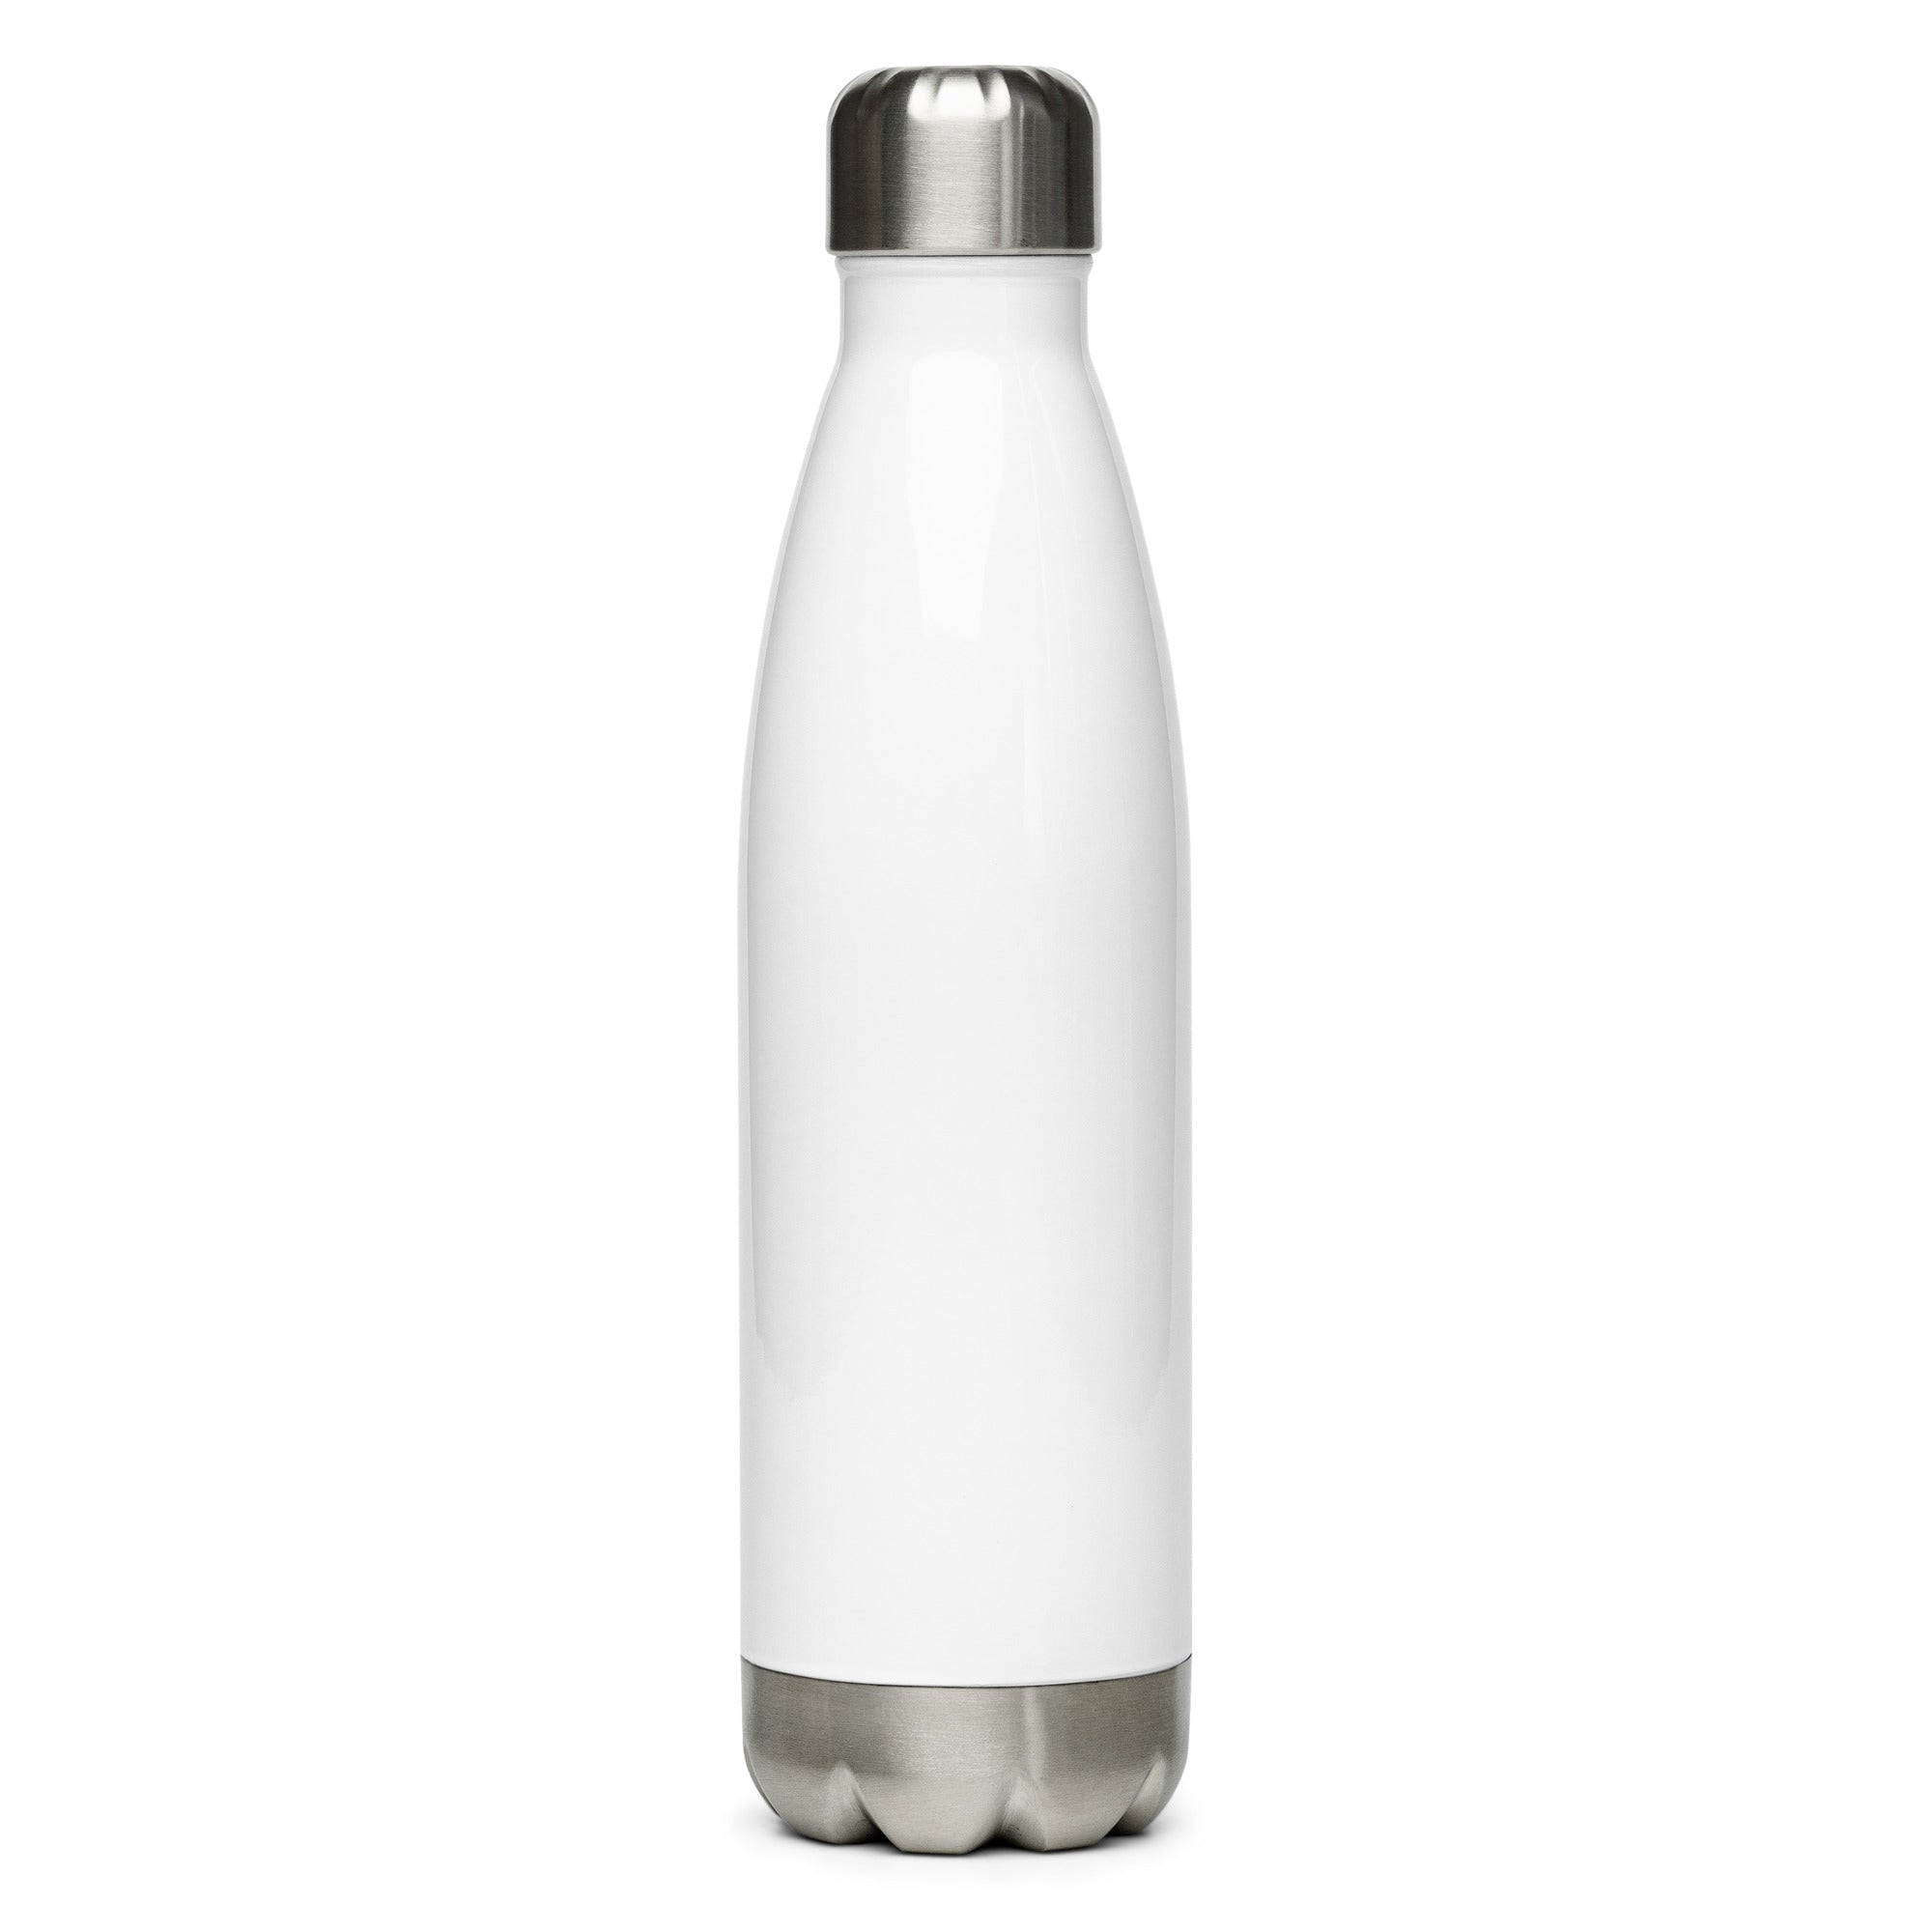 Stainless steel water bottle - John 15:12